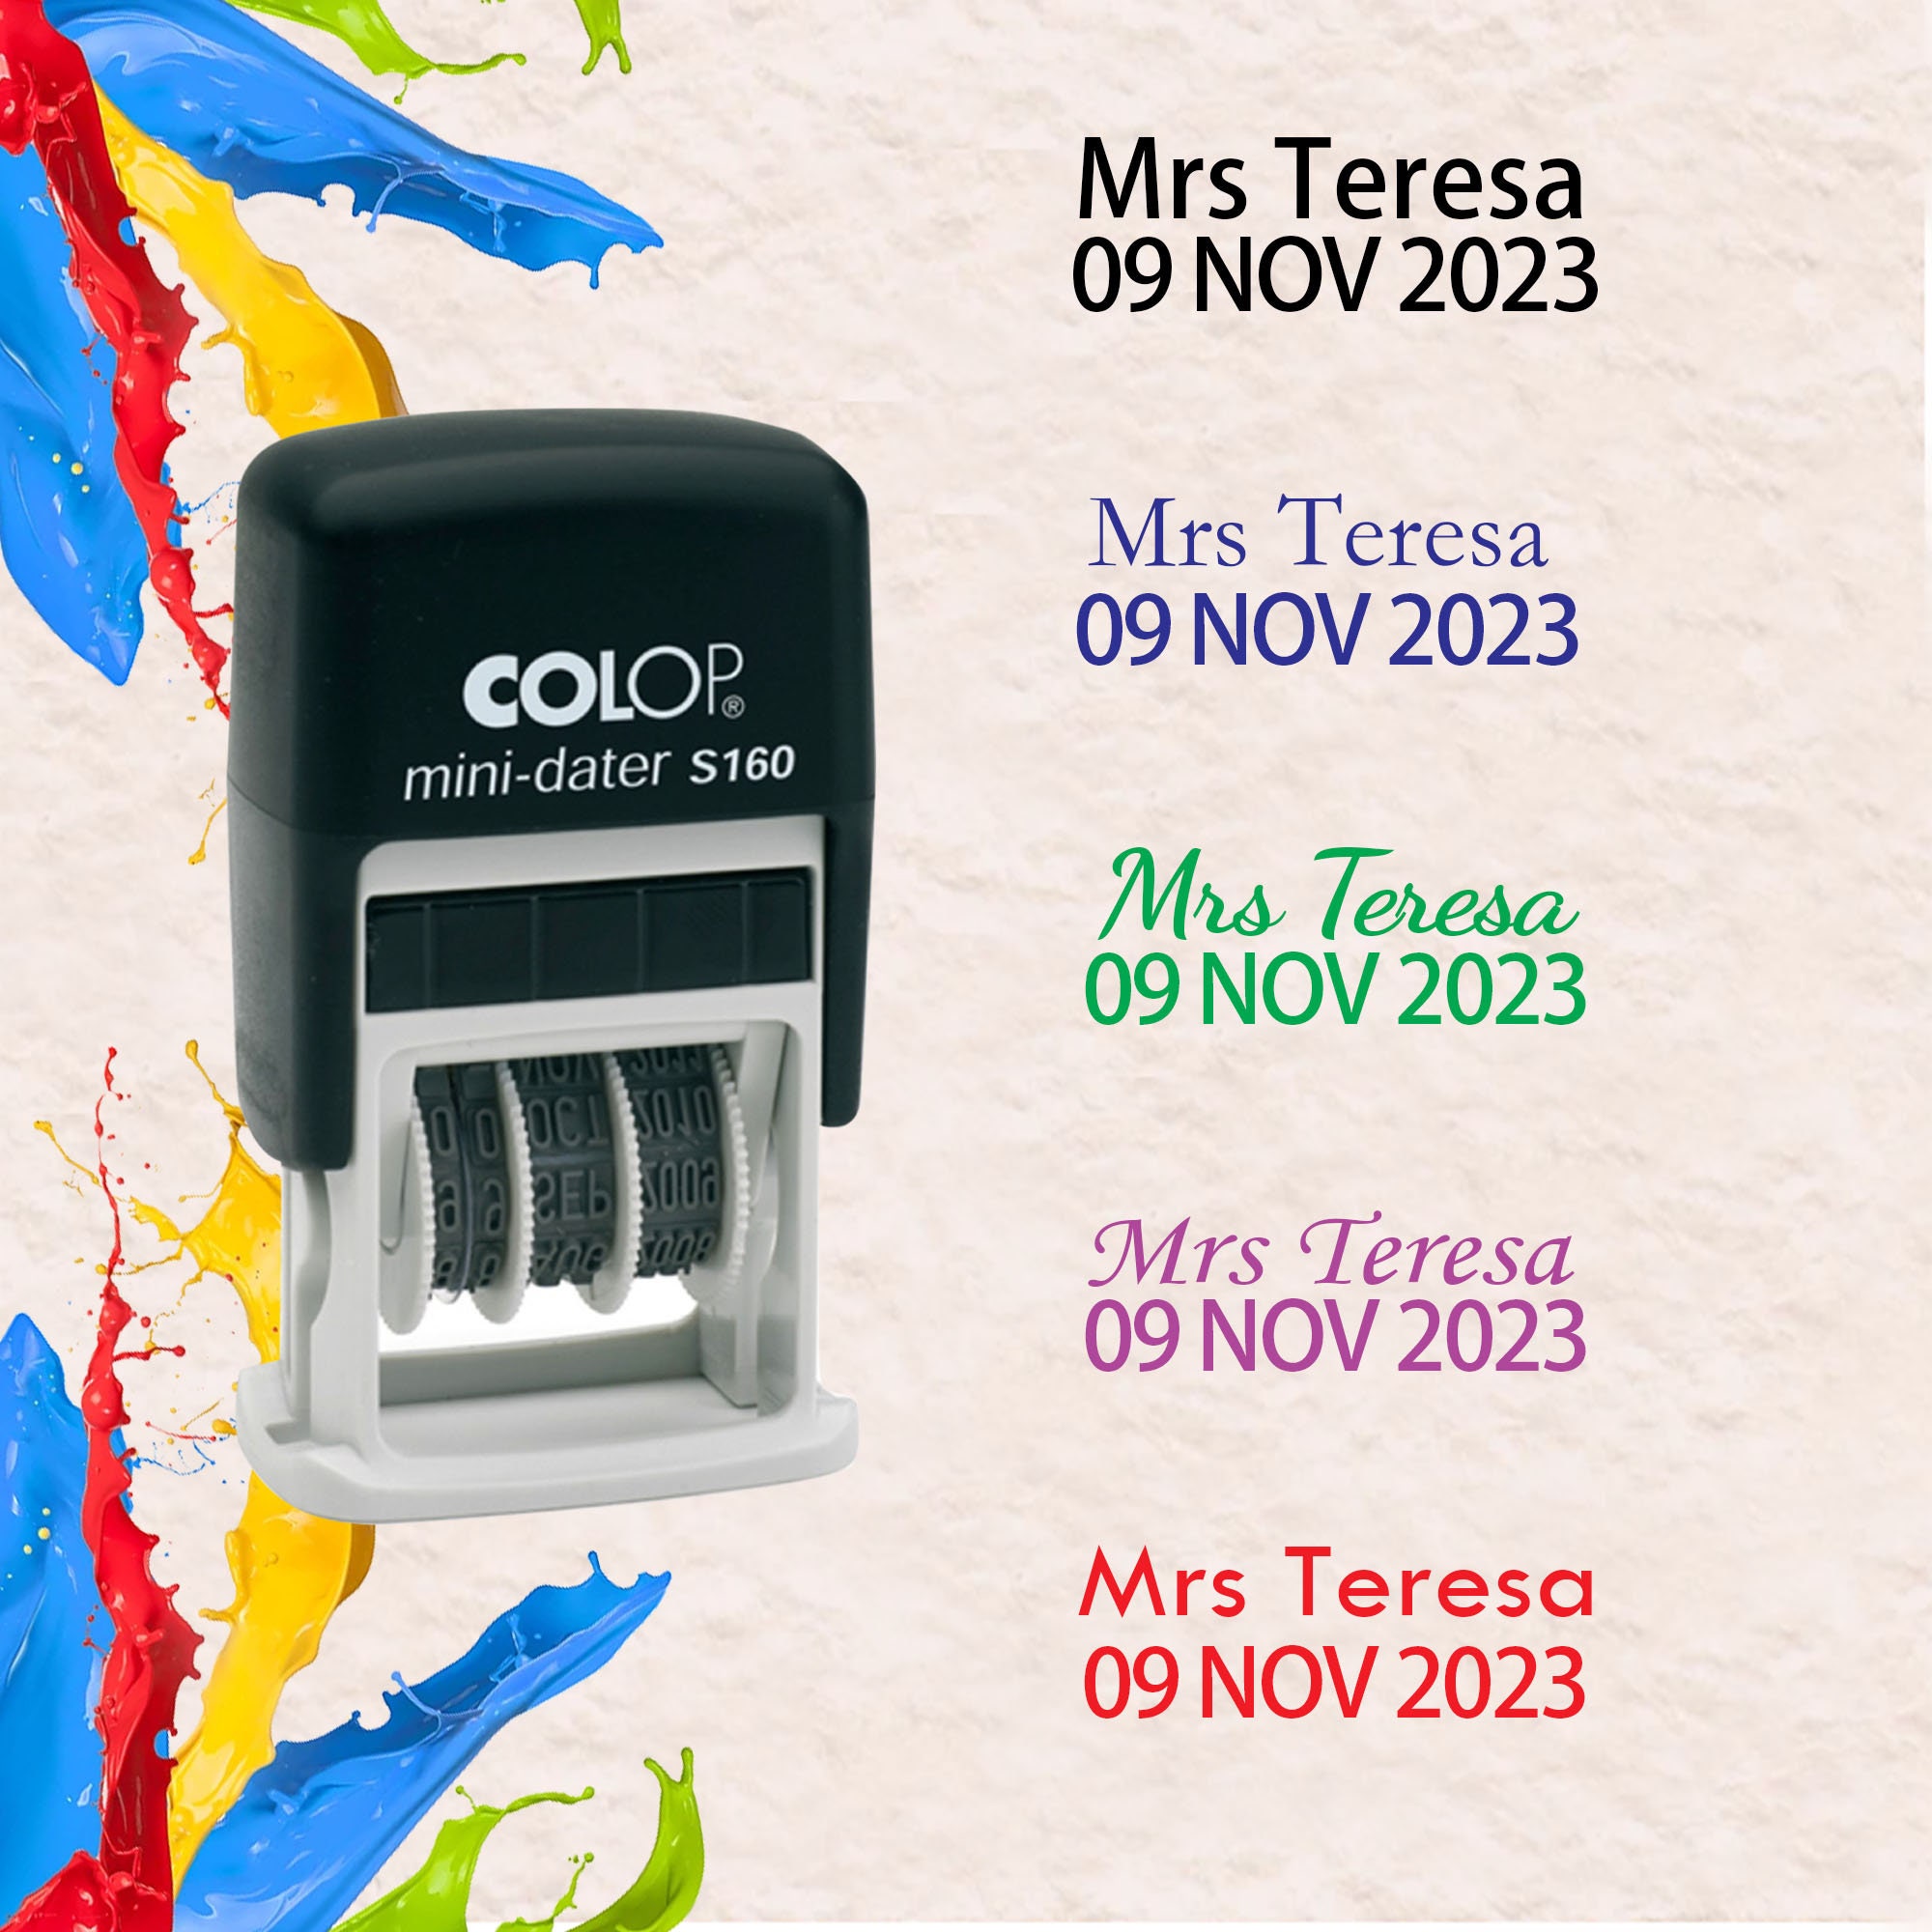 Teachers Name Stamps